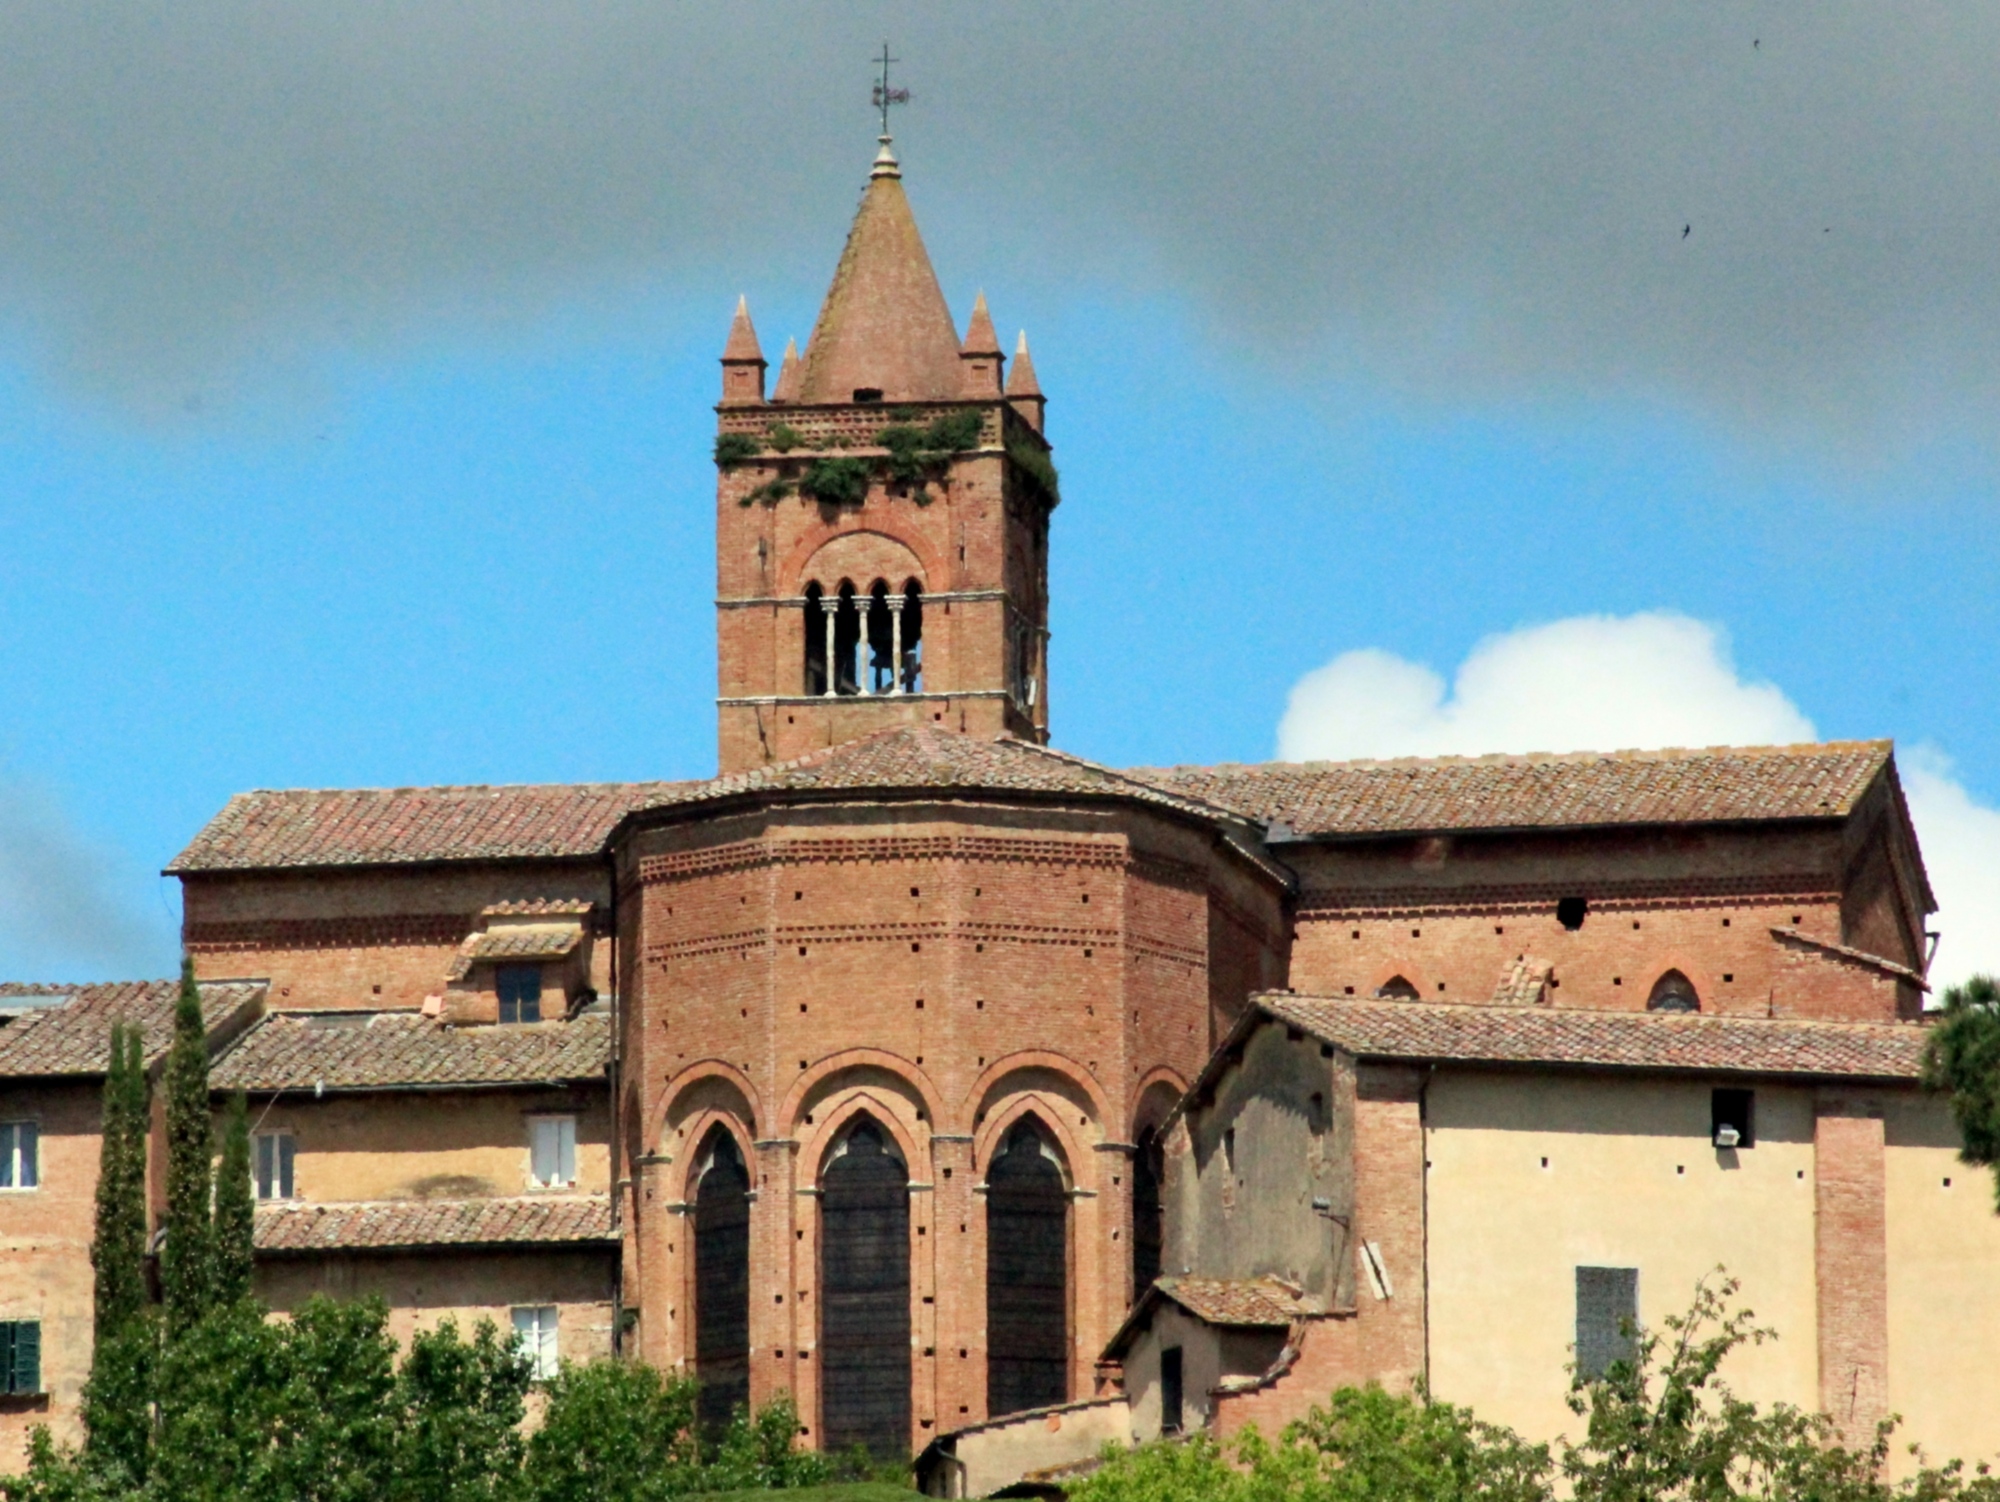 Basilica of Santa Maria dei Servi in Siena